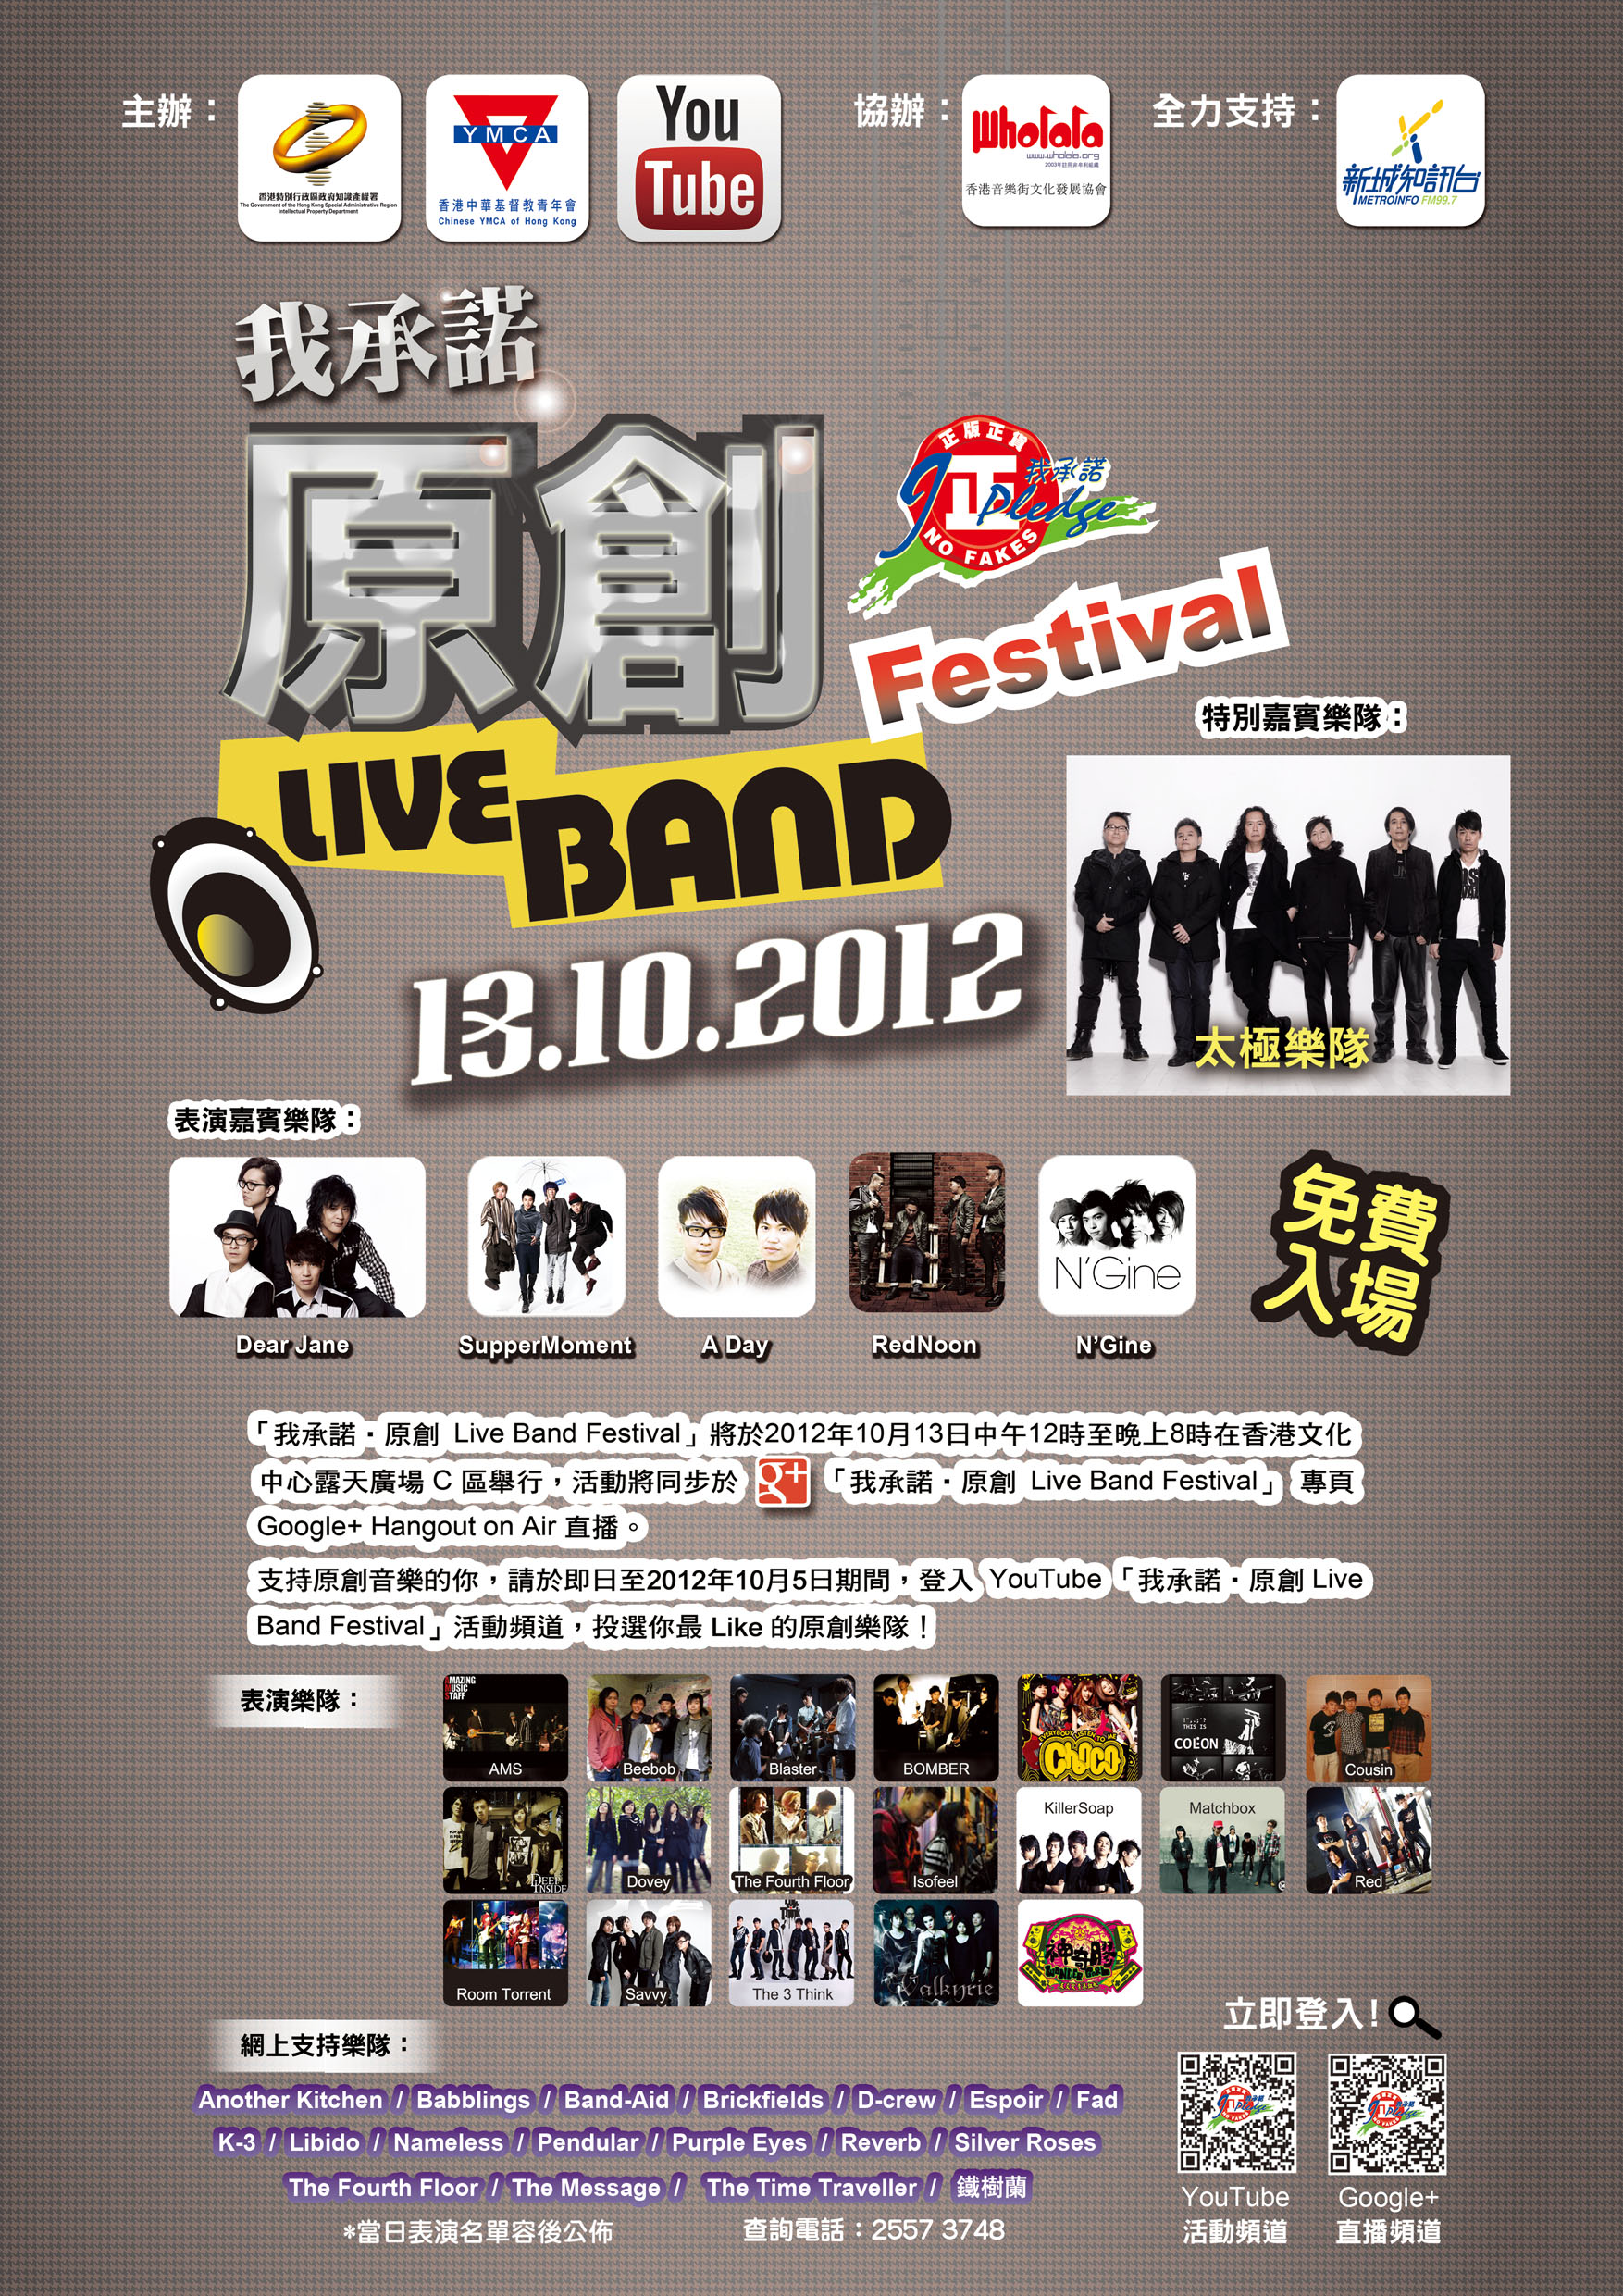 “I Pledge” Live Band Festival